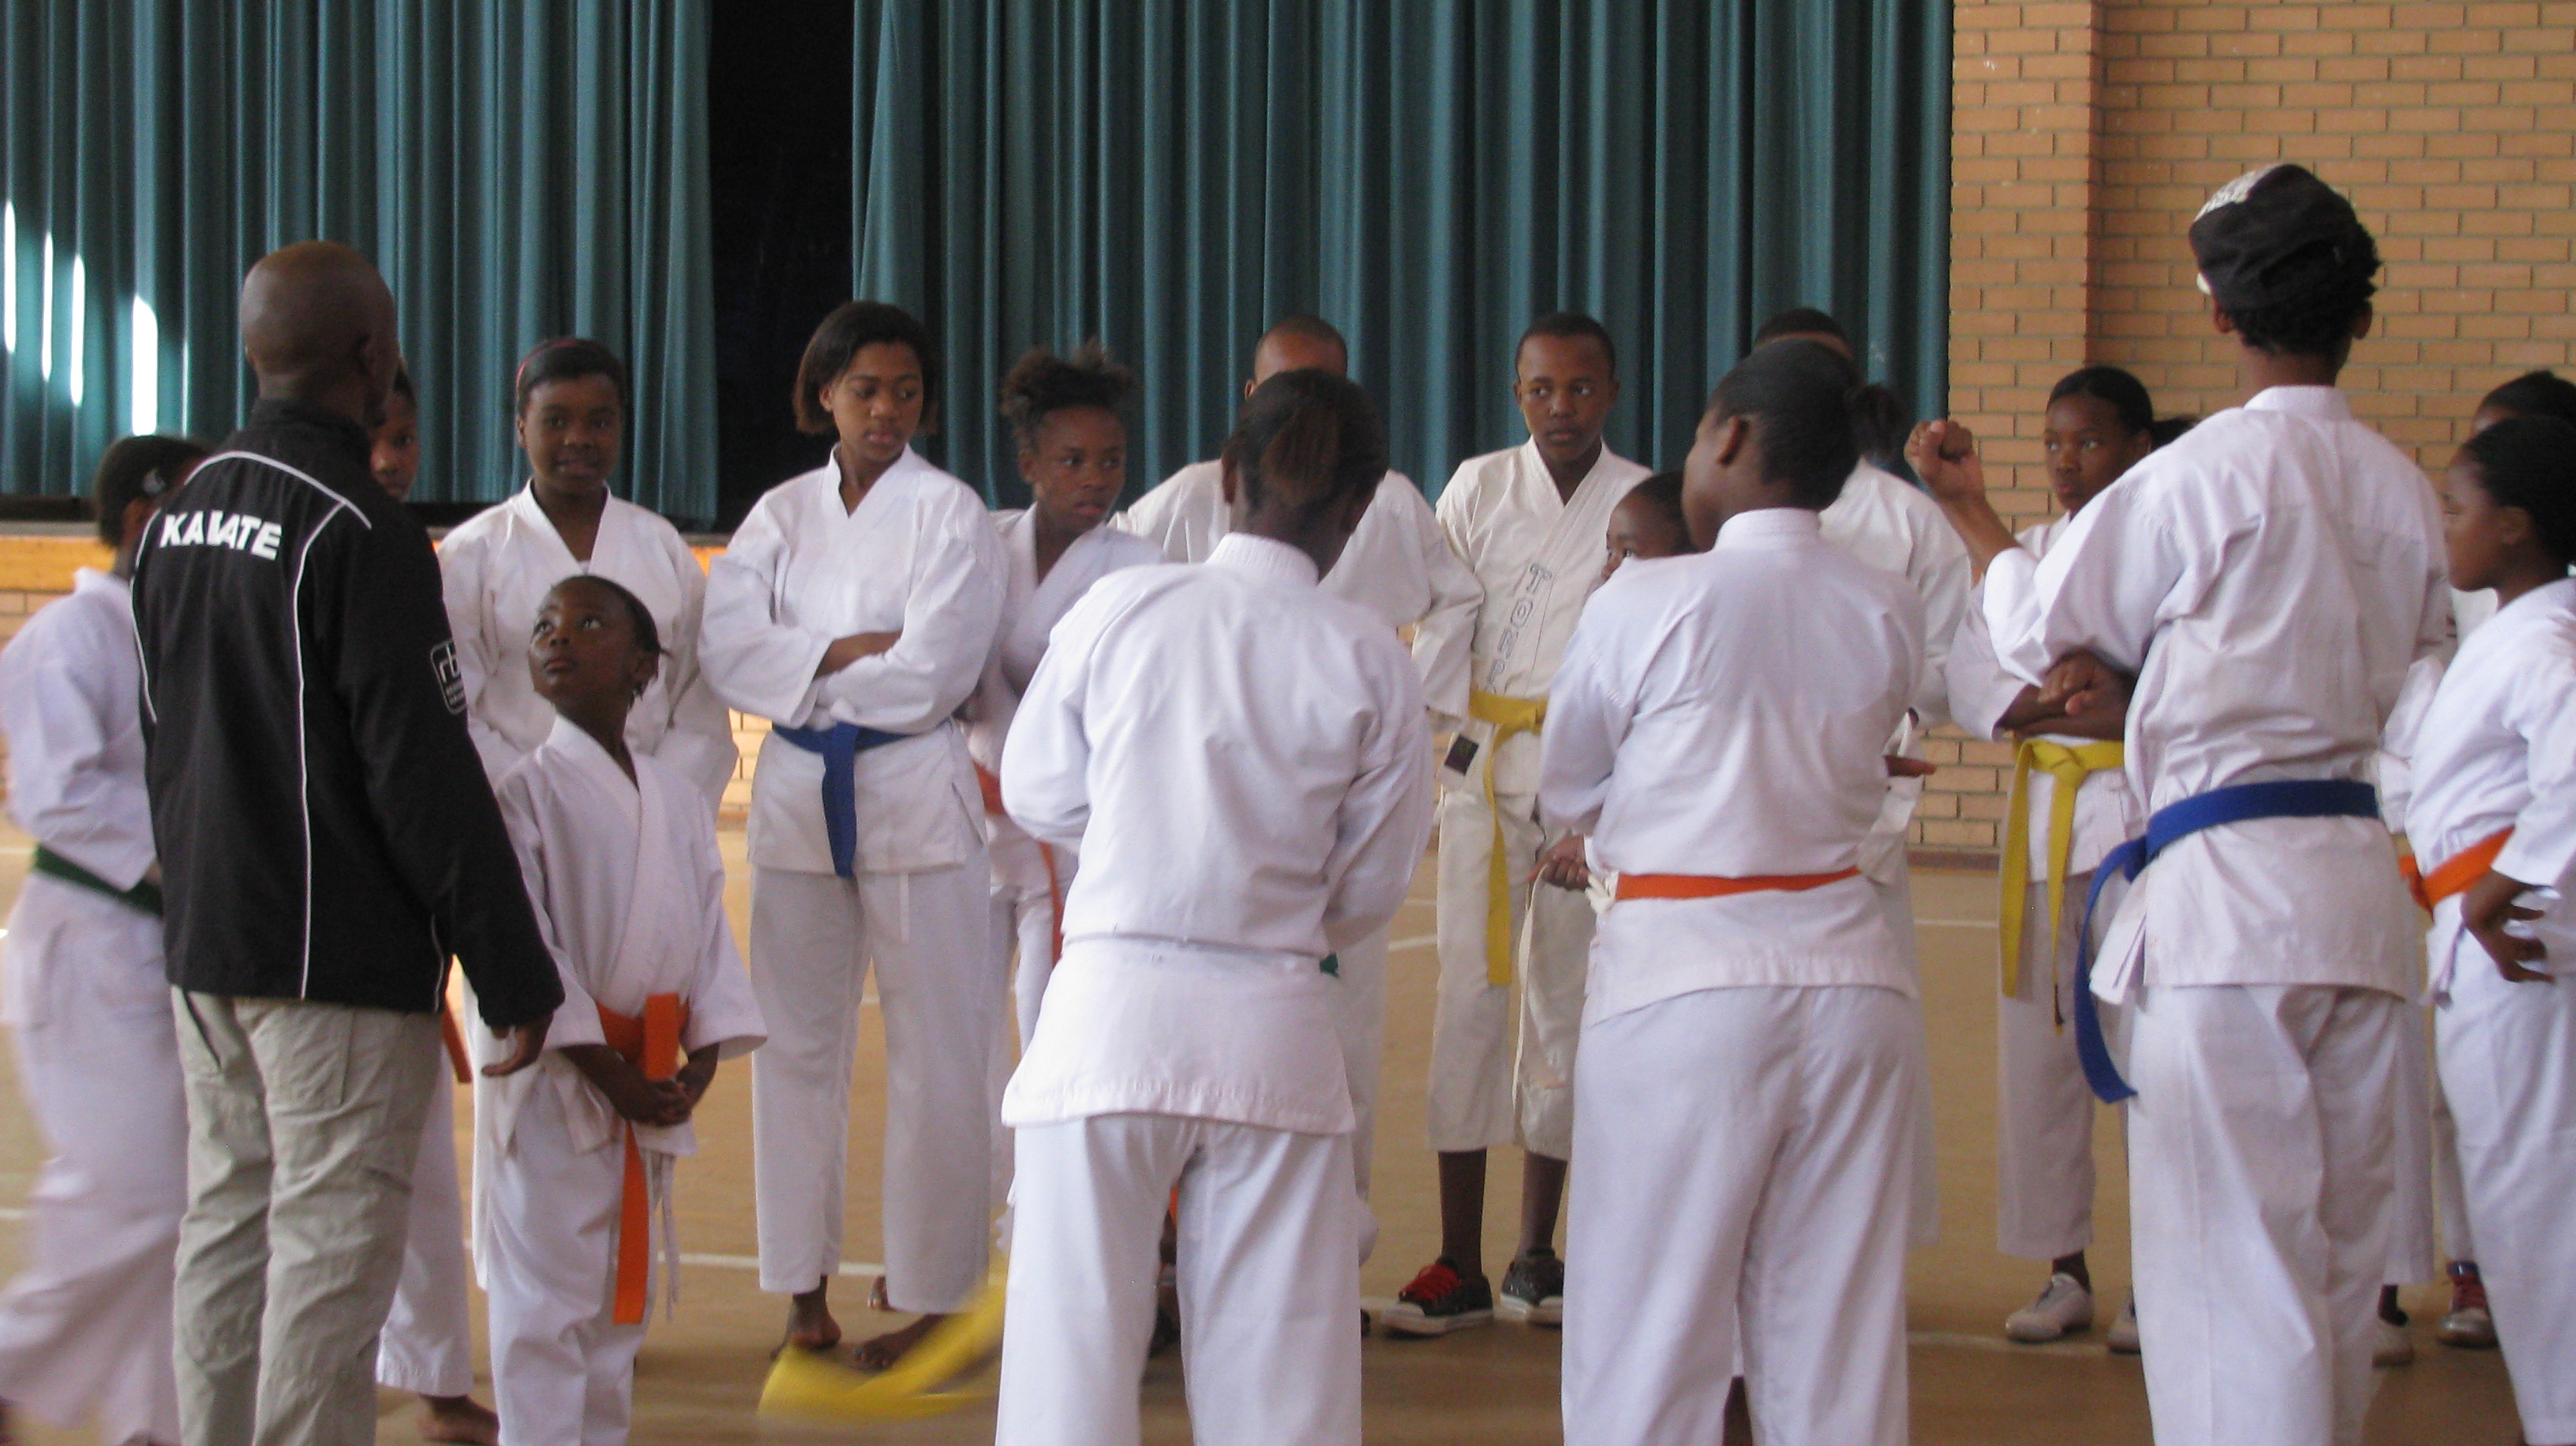 Instructors wish their karatekas luck